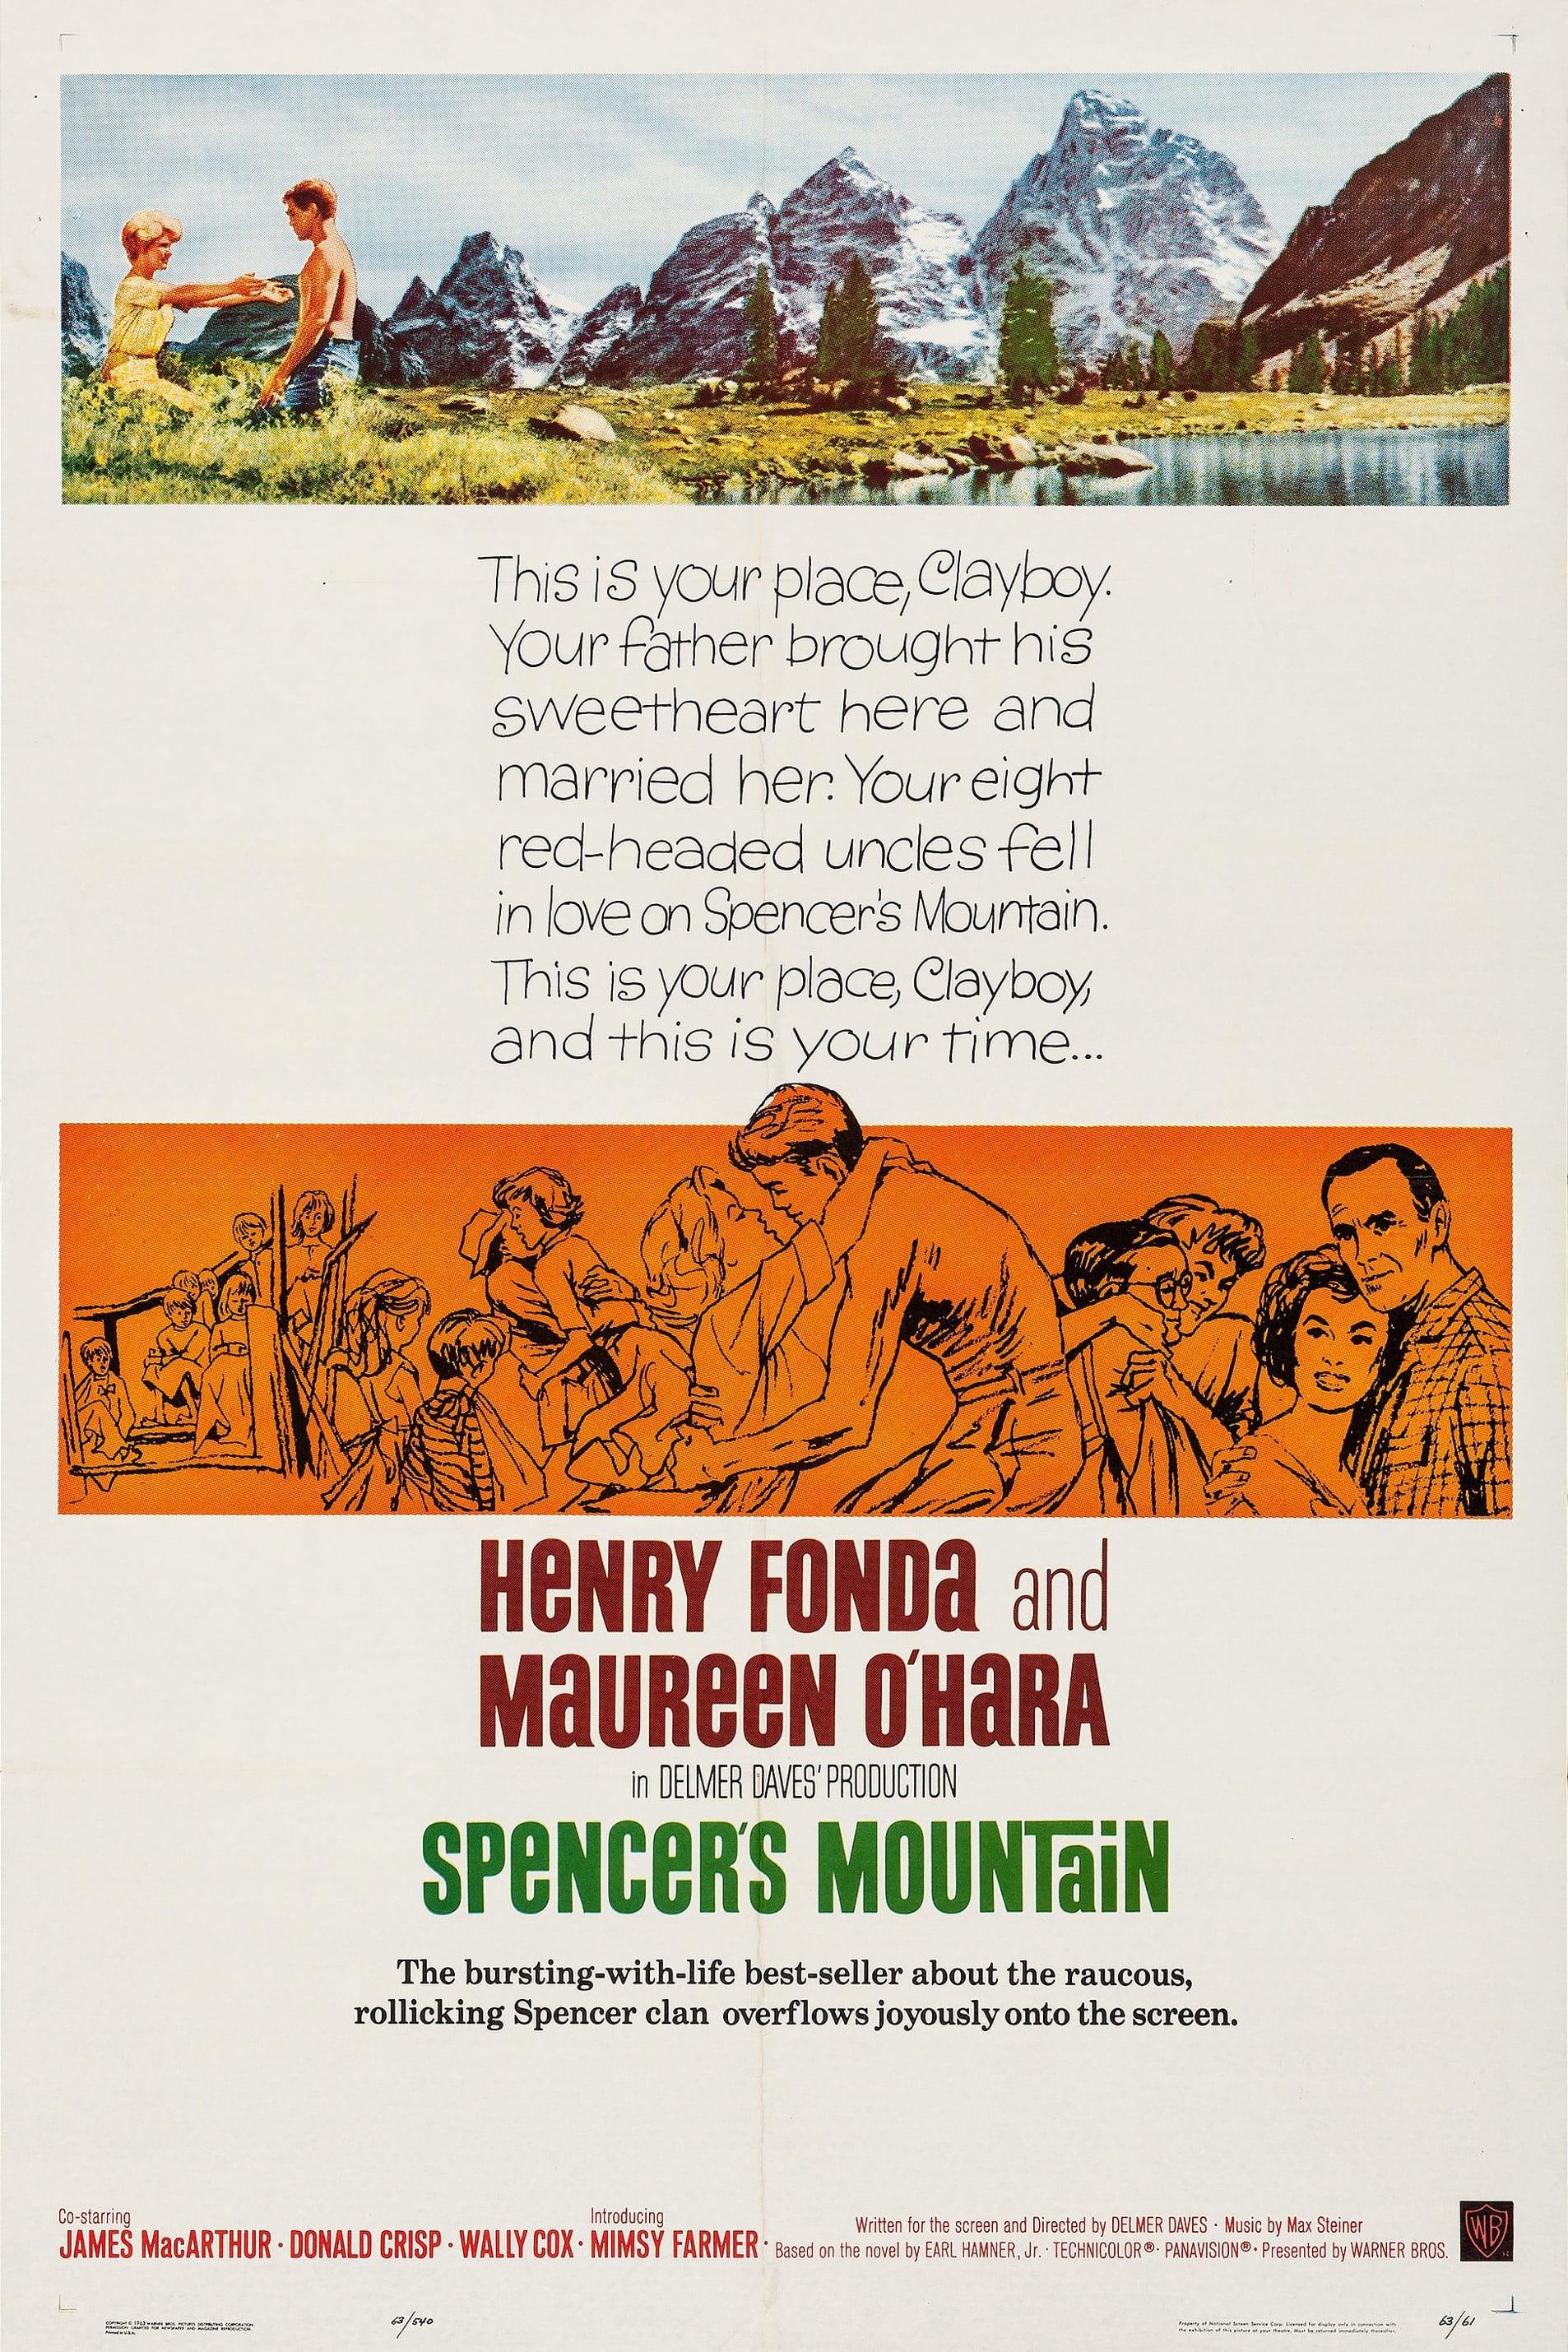 Spencer's Mountain poster